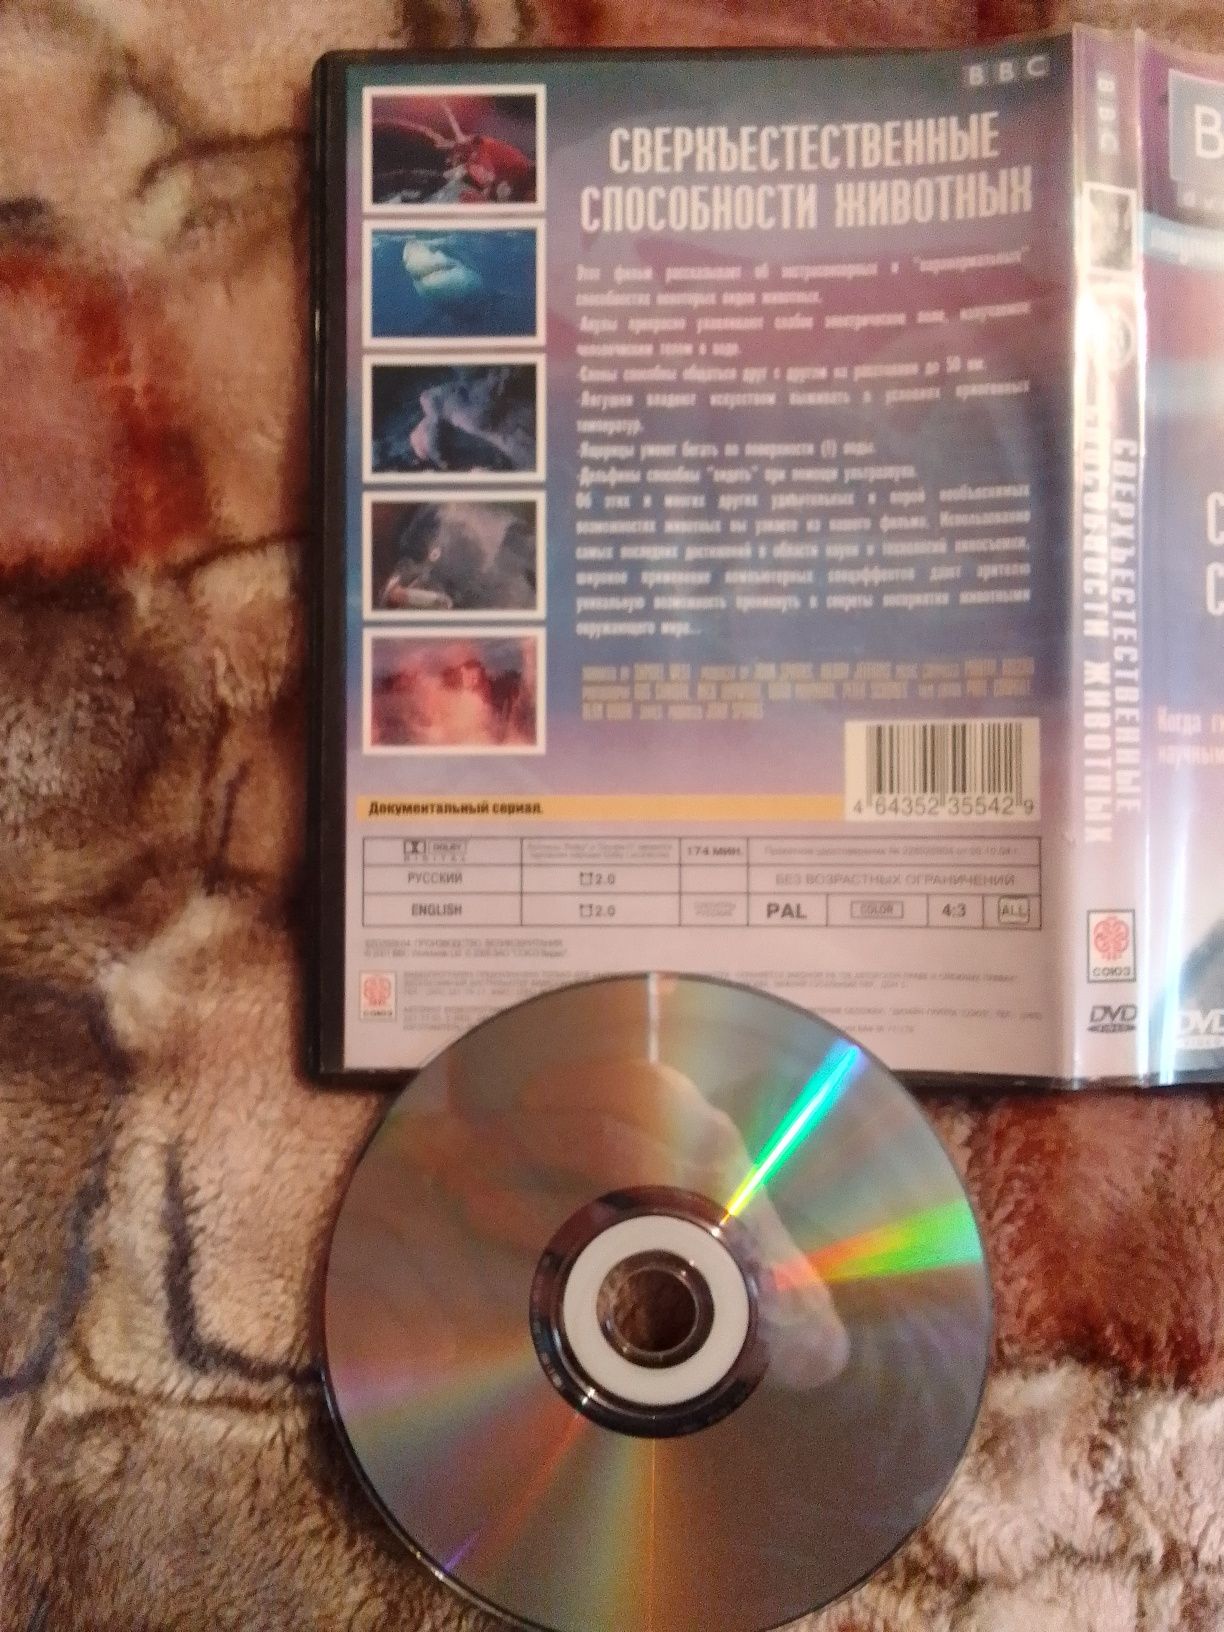 DVD/BBC документальные диски 4шт.